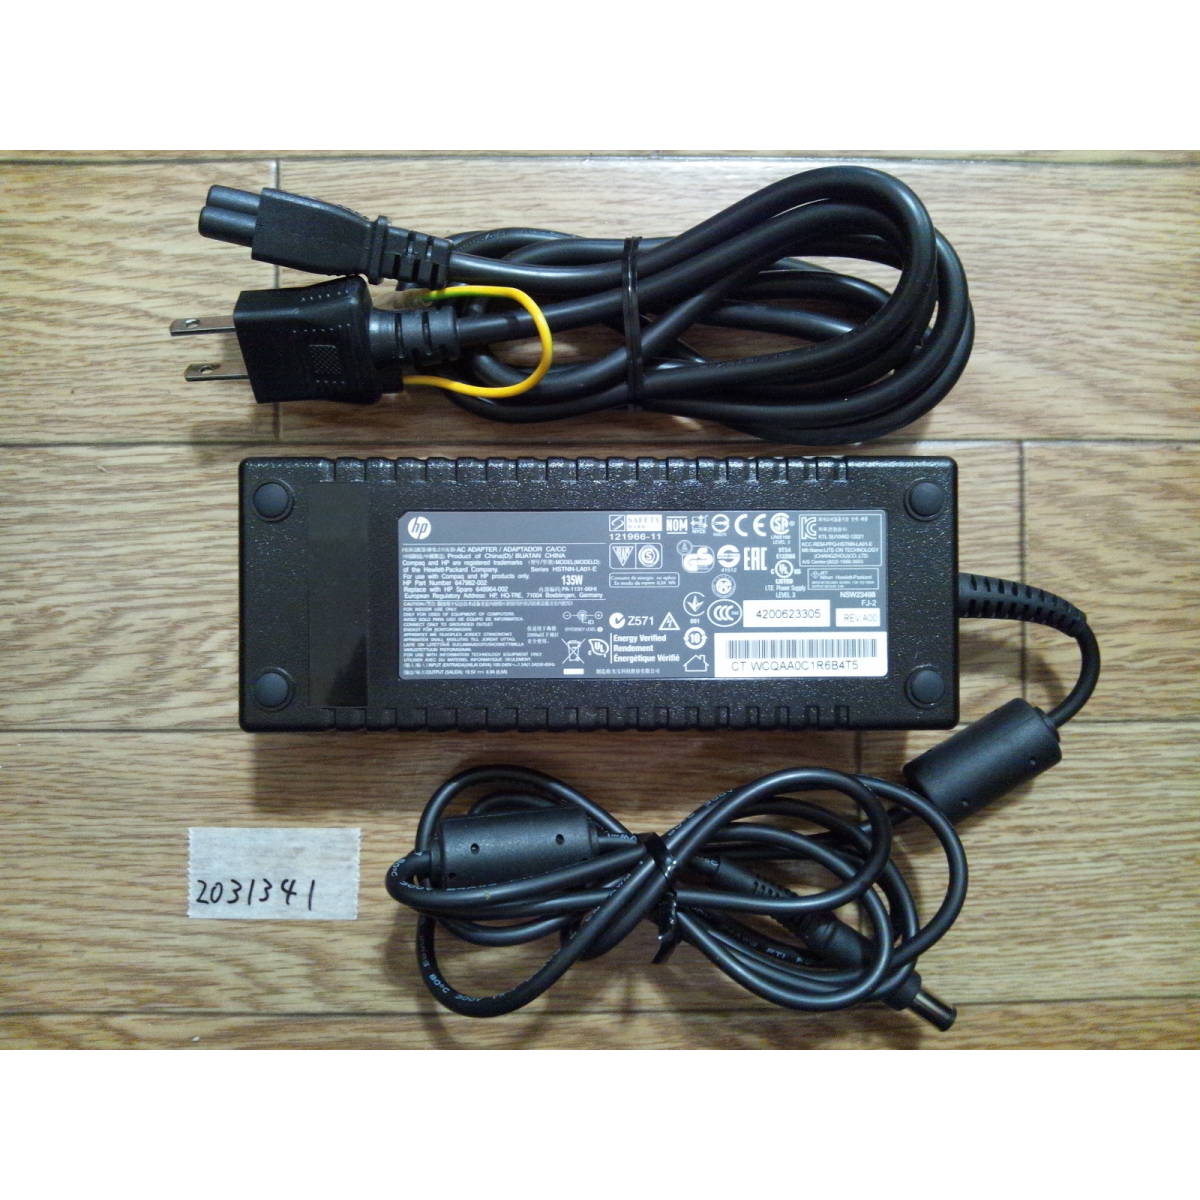 HP AC adaptor HSTNN-LA01-E 19.5V 6.9A(135W)(2031346